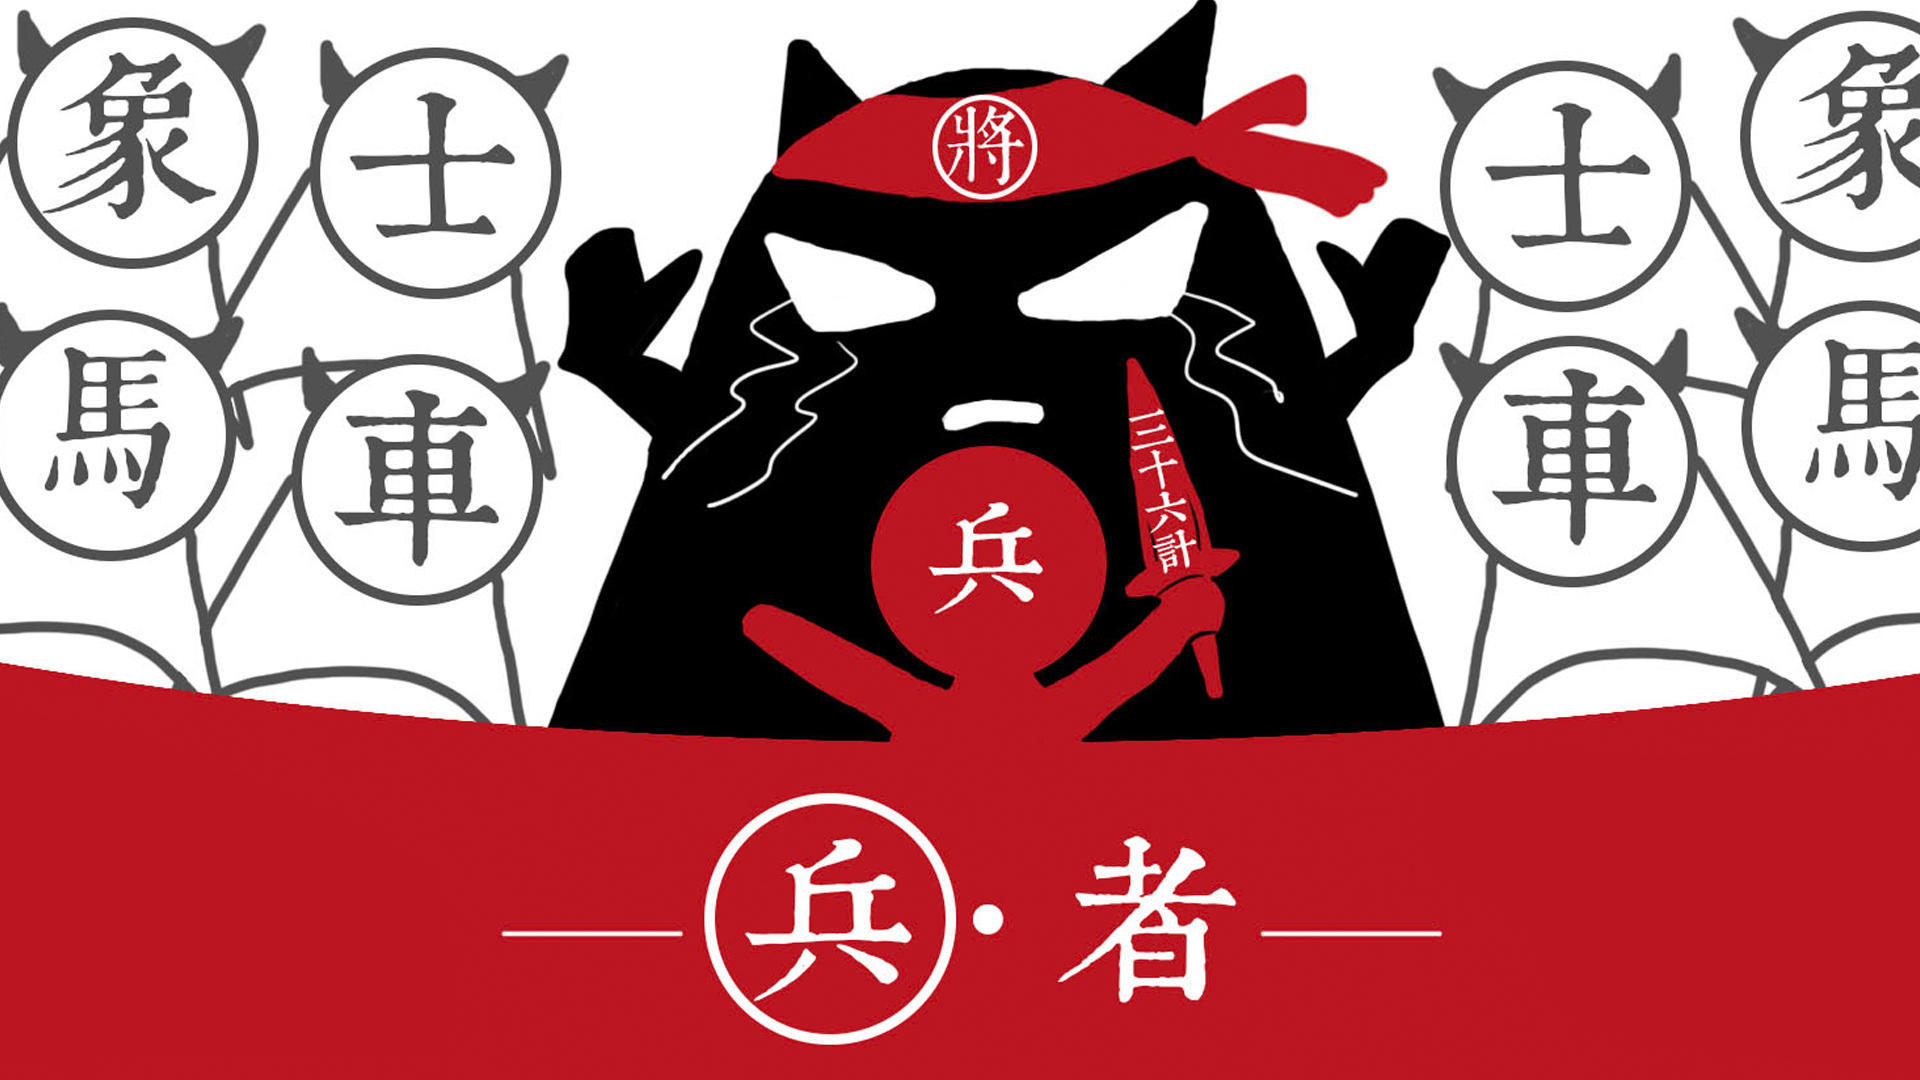 Banner of 兵者 